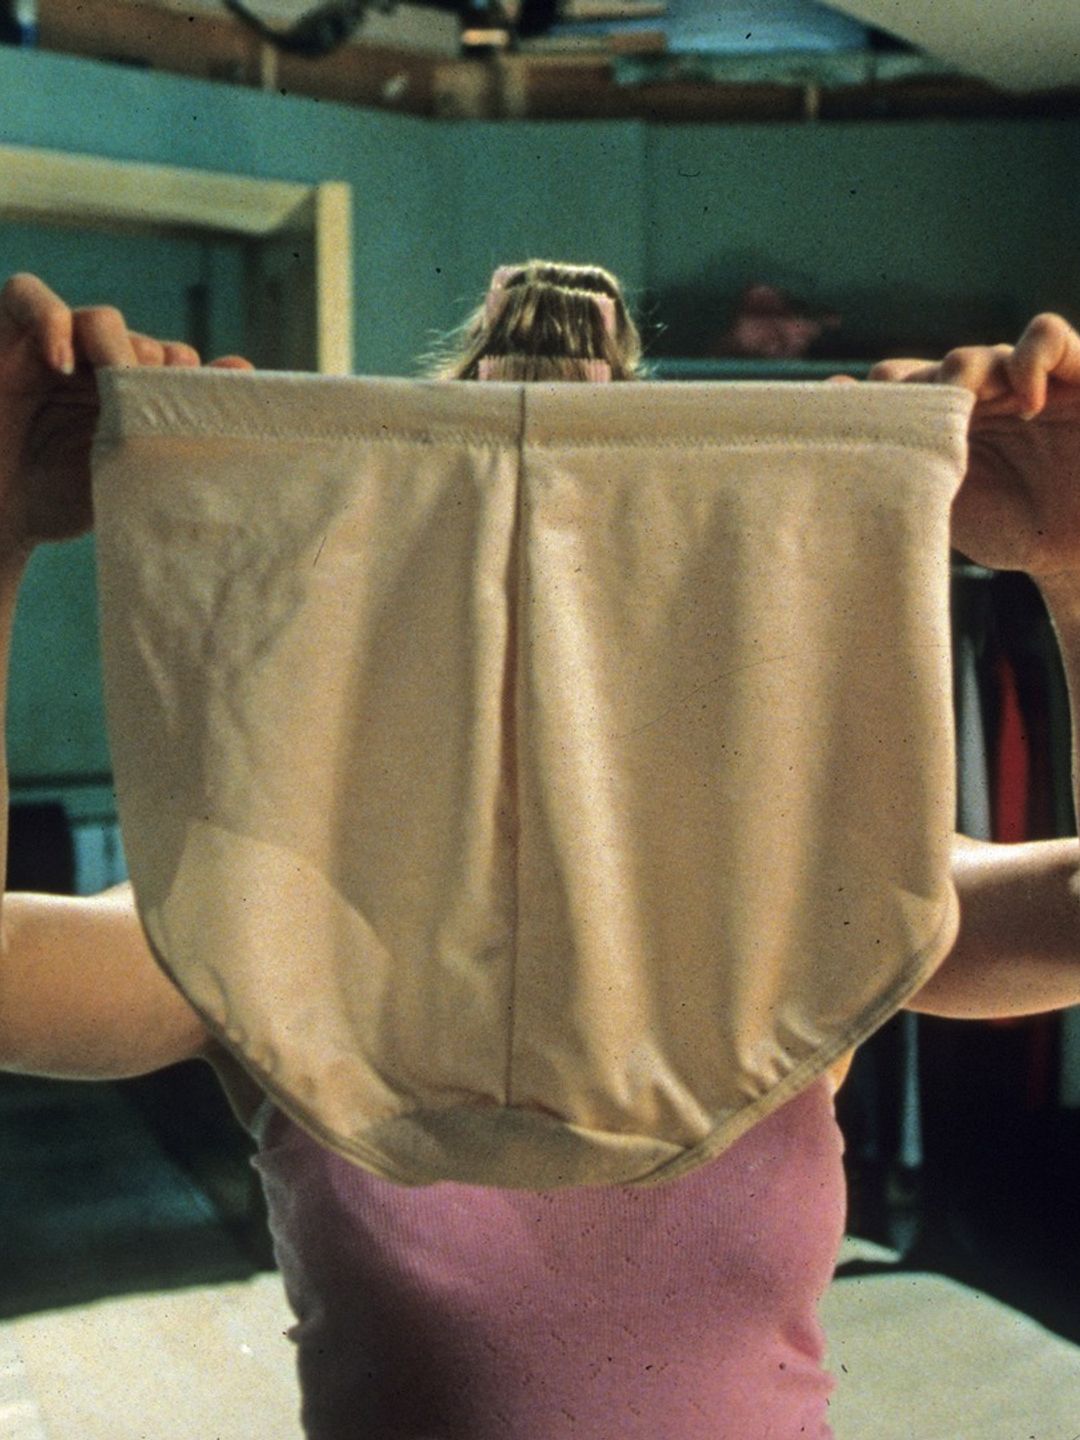 Bridget Jones holds up her Spanx underwear to the camera